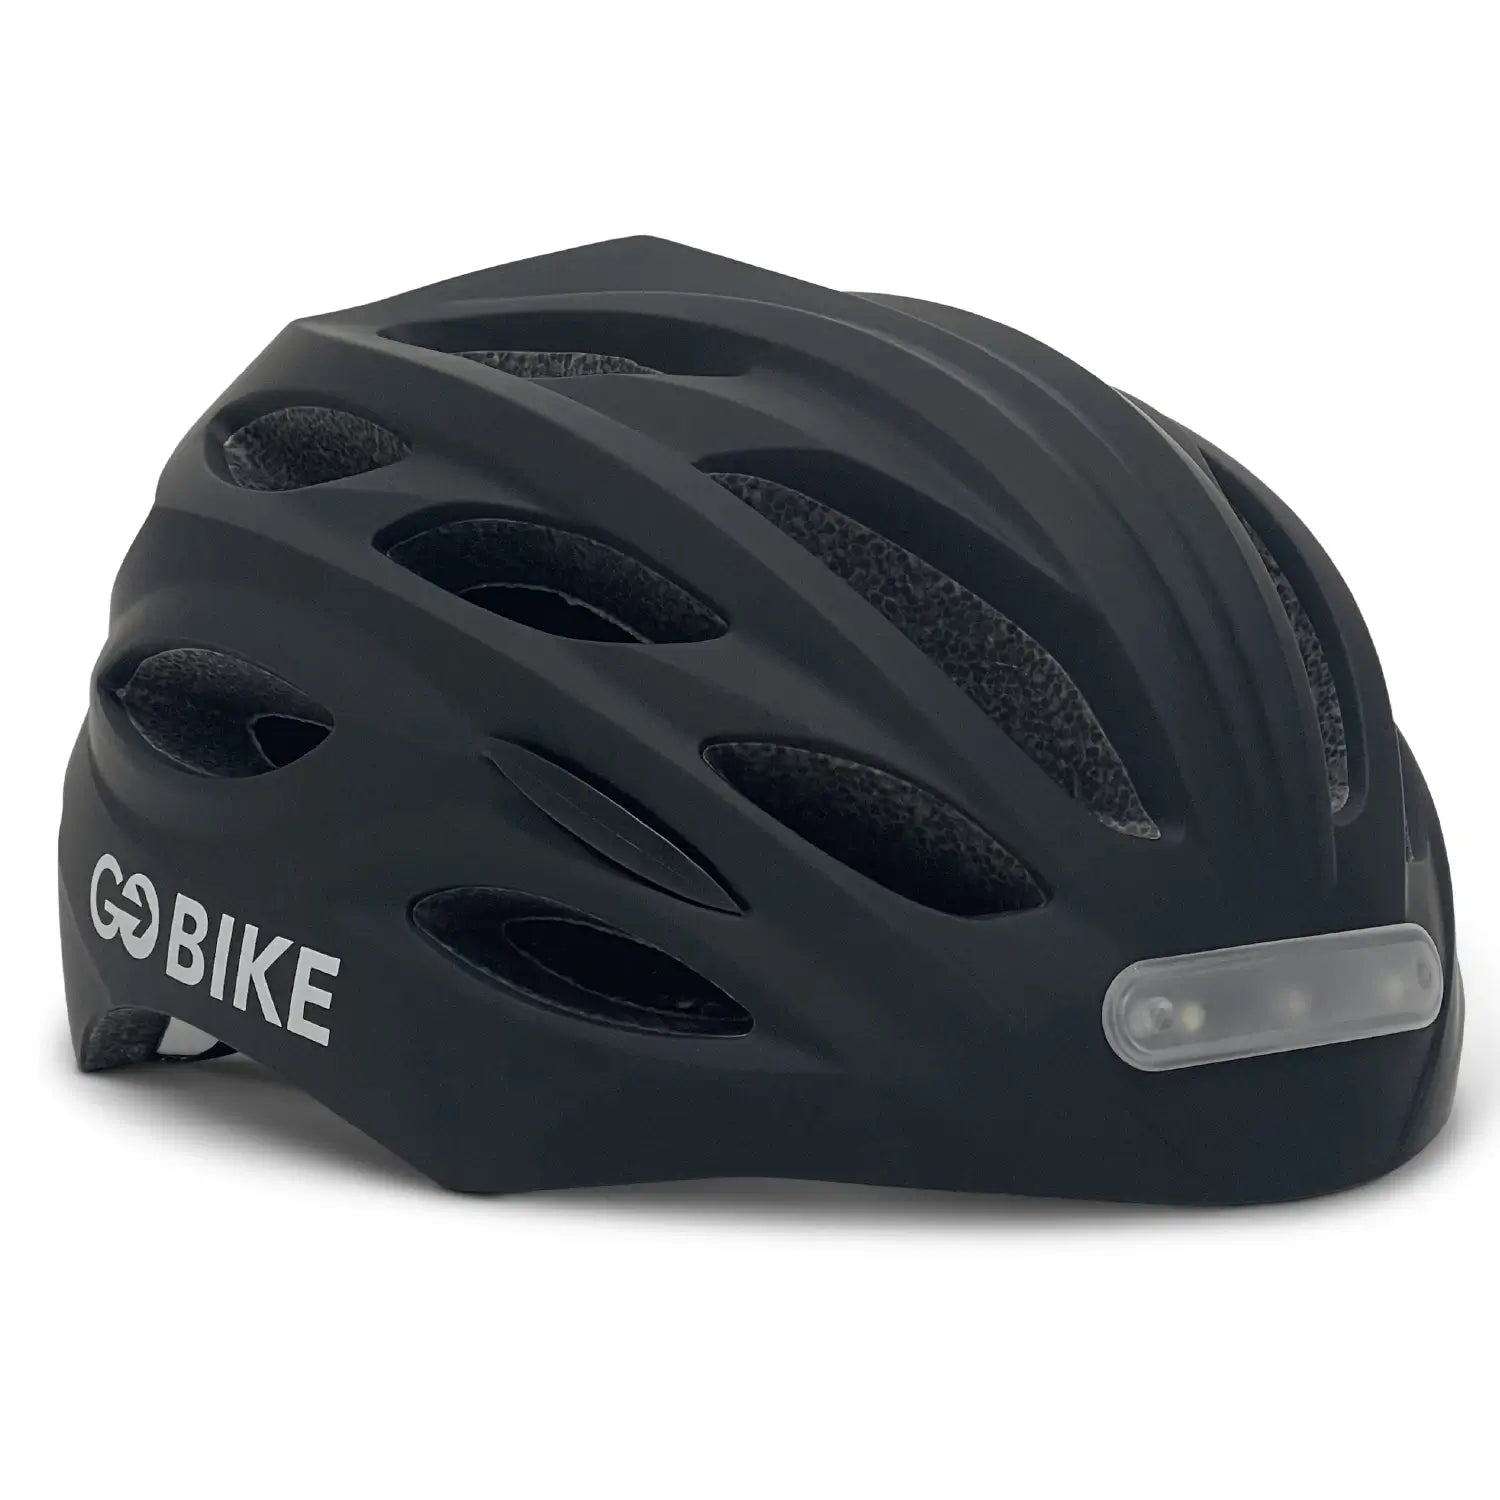 GOBIKE Helmet With Safety Warning Light_6